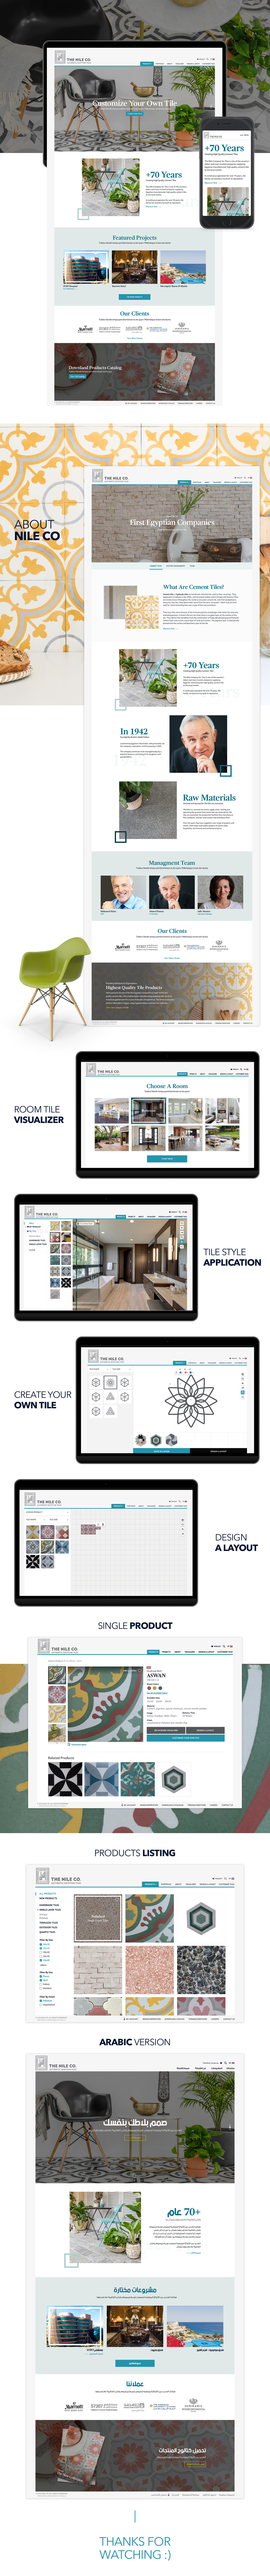 tiles design home Interior exterior architecture decoration webapp Website product